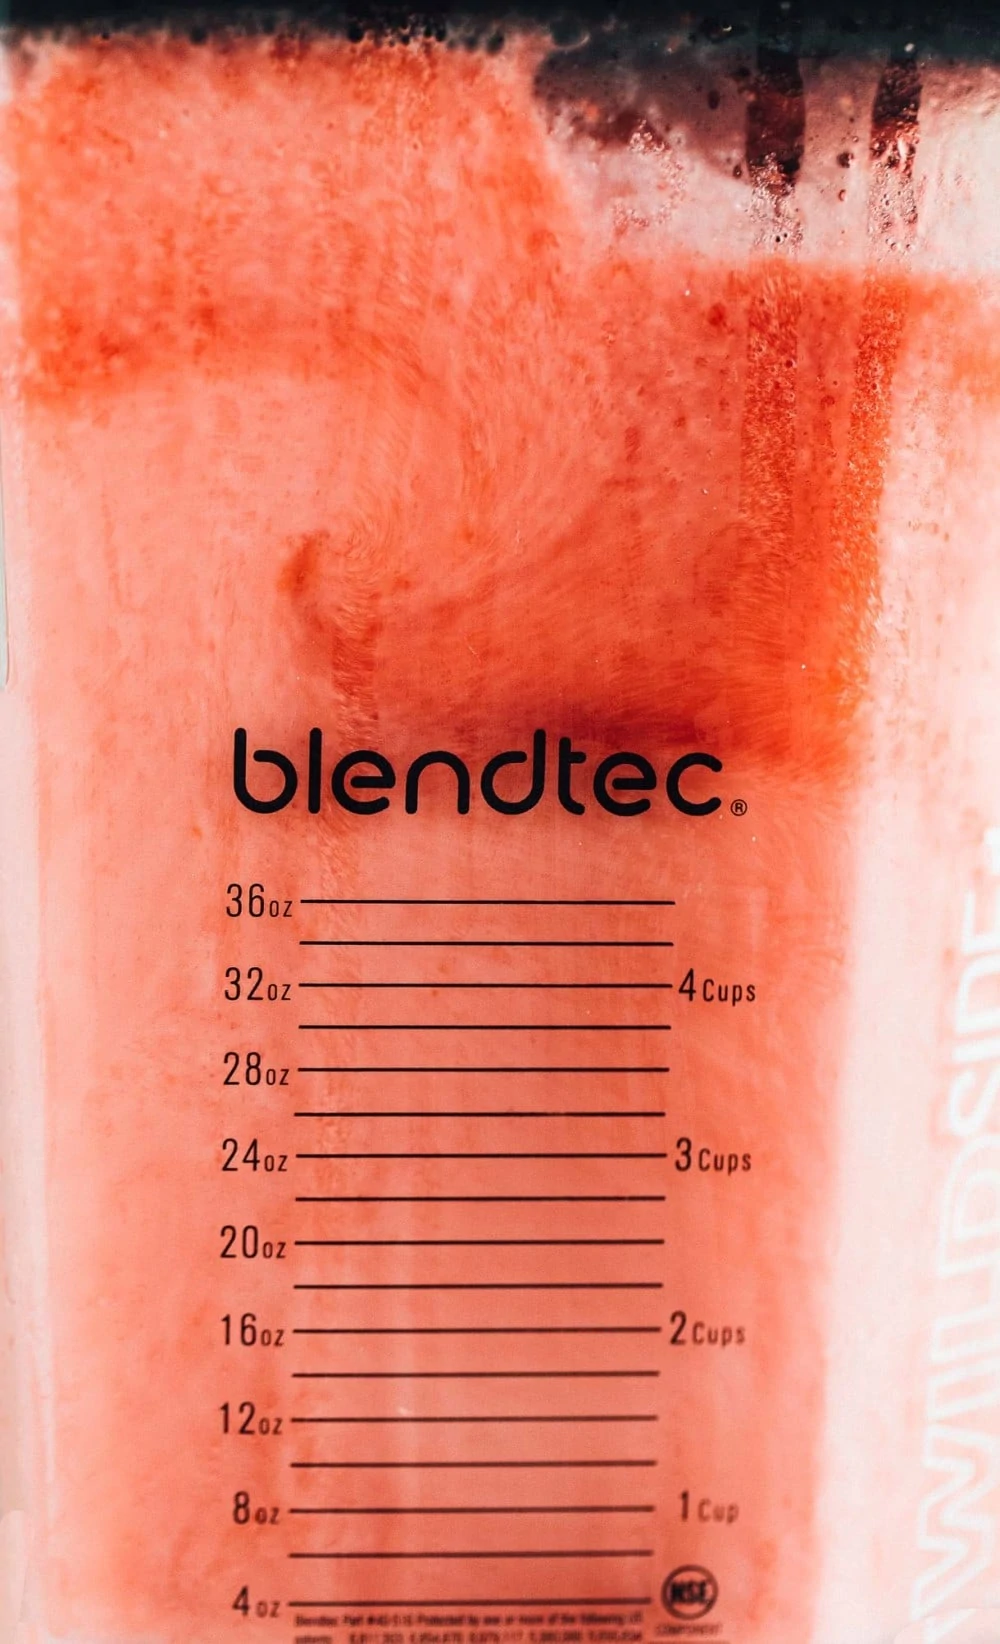 blending frose in a blender